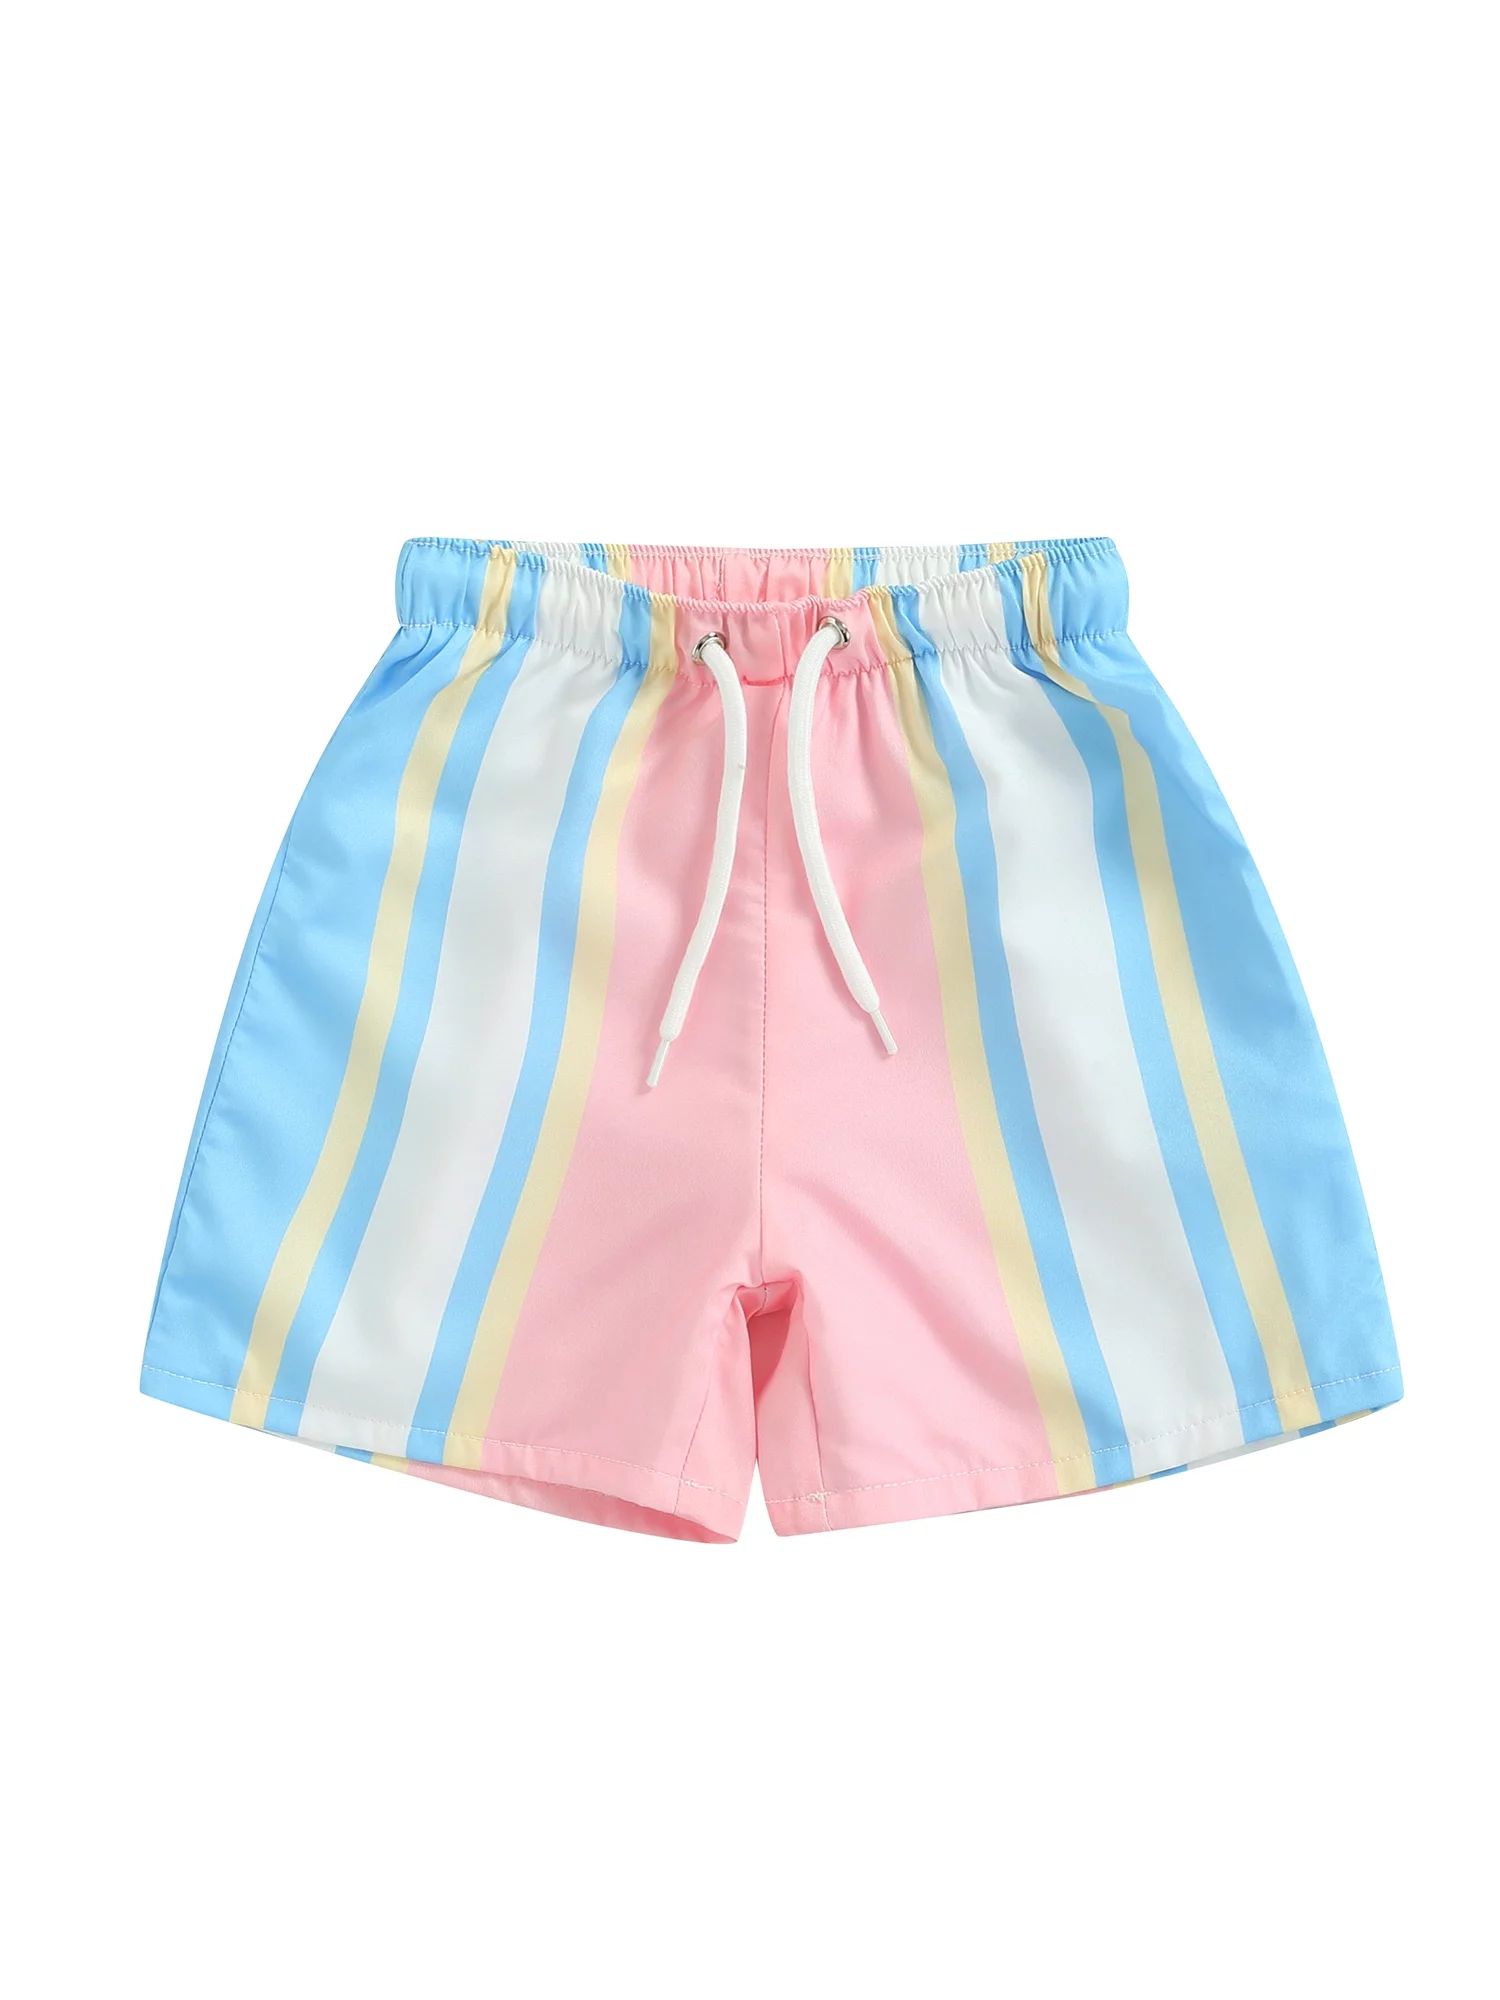 Raruxxin Toddler Boy Quick Dry Swim Trunks Beach Board Shorts Swimwear Summer Striped/Coconut Tre... | Walmart (US)